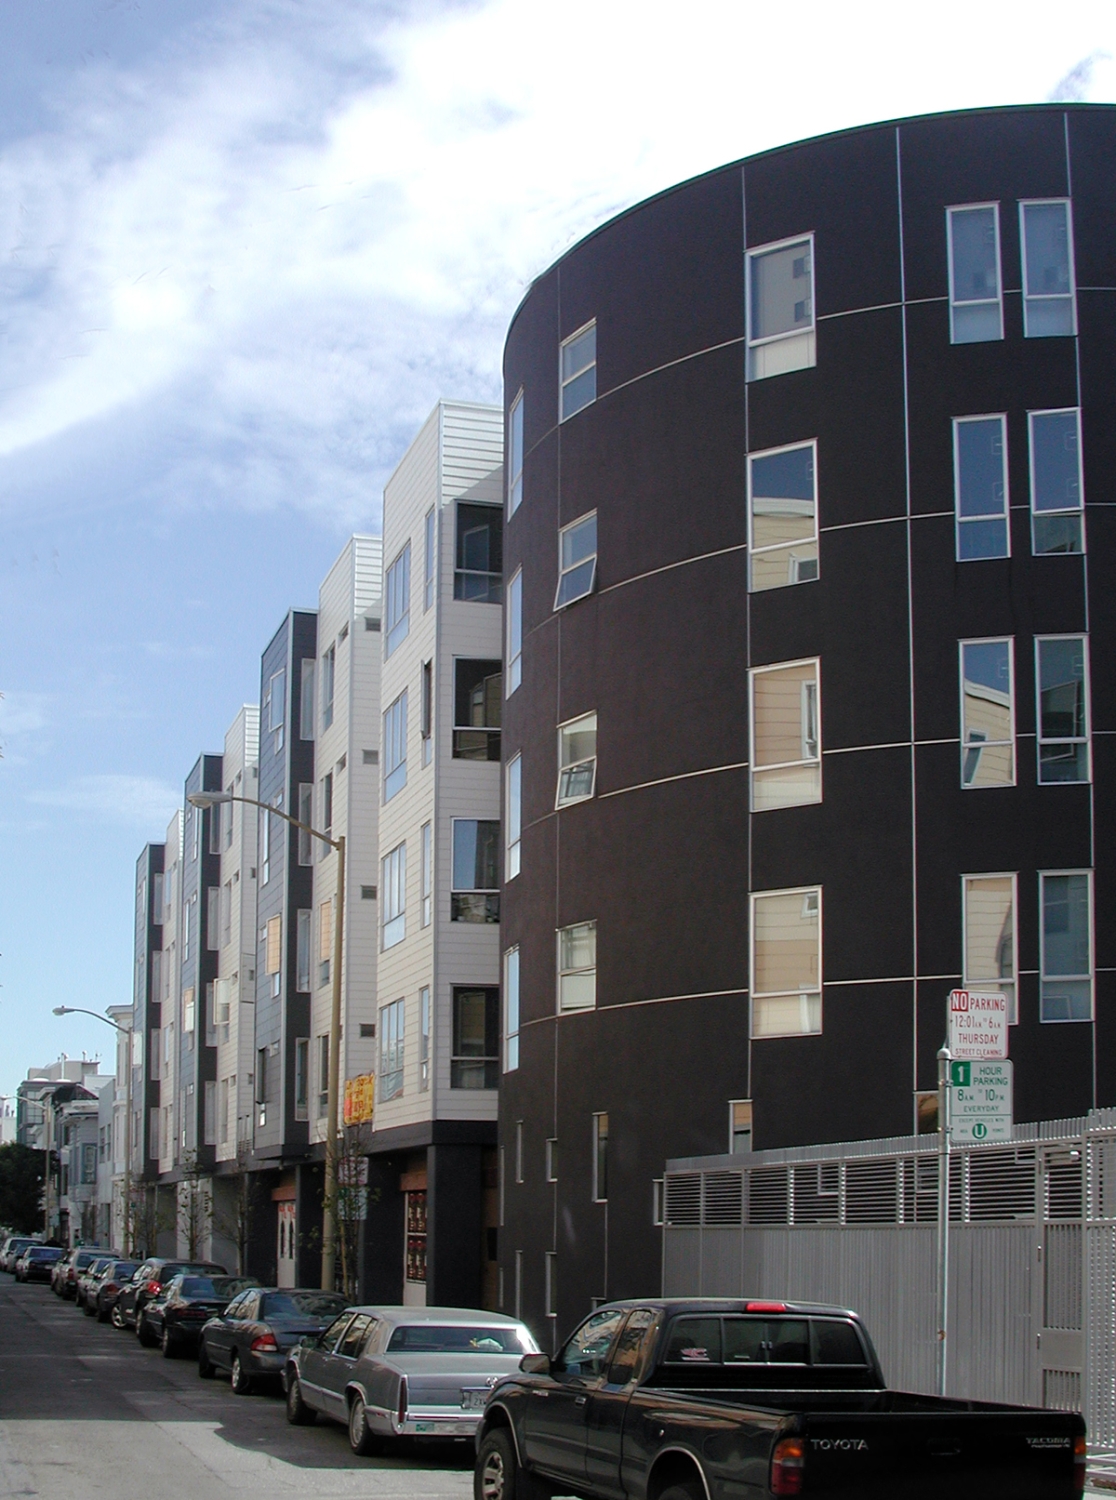 Exterior view of 8th & Howard/SOMA Studios in San Francisco, Ca.